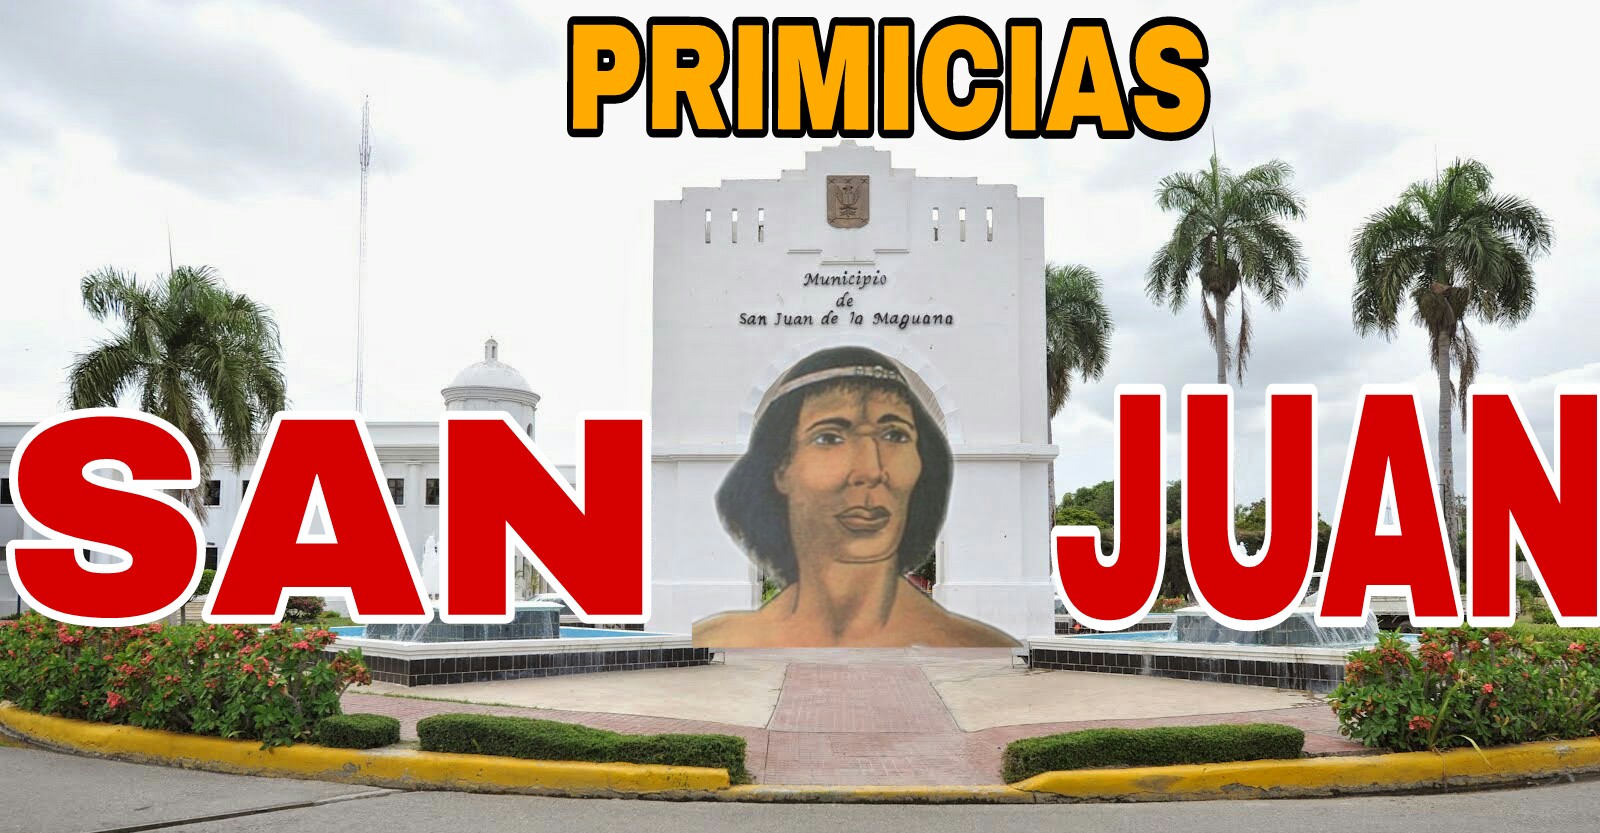 PRIMICIAS SAN JUAN